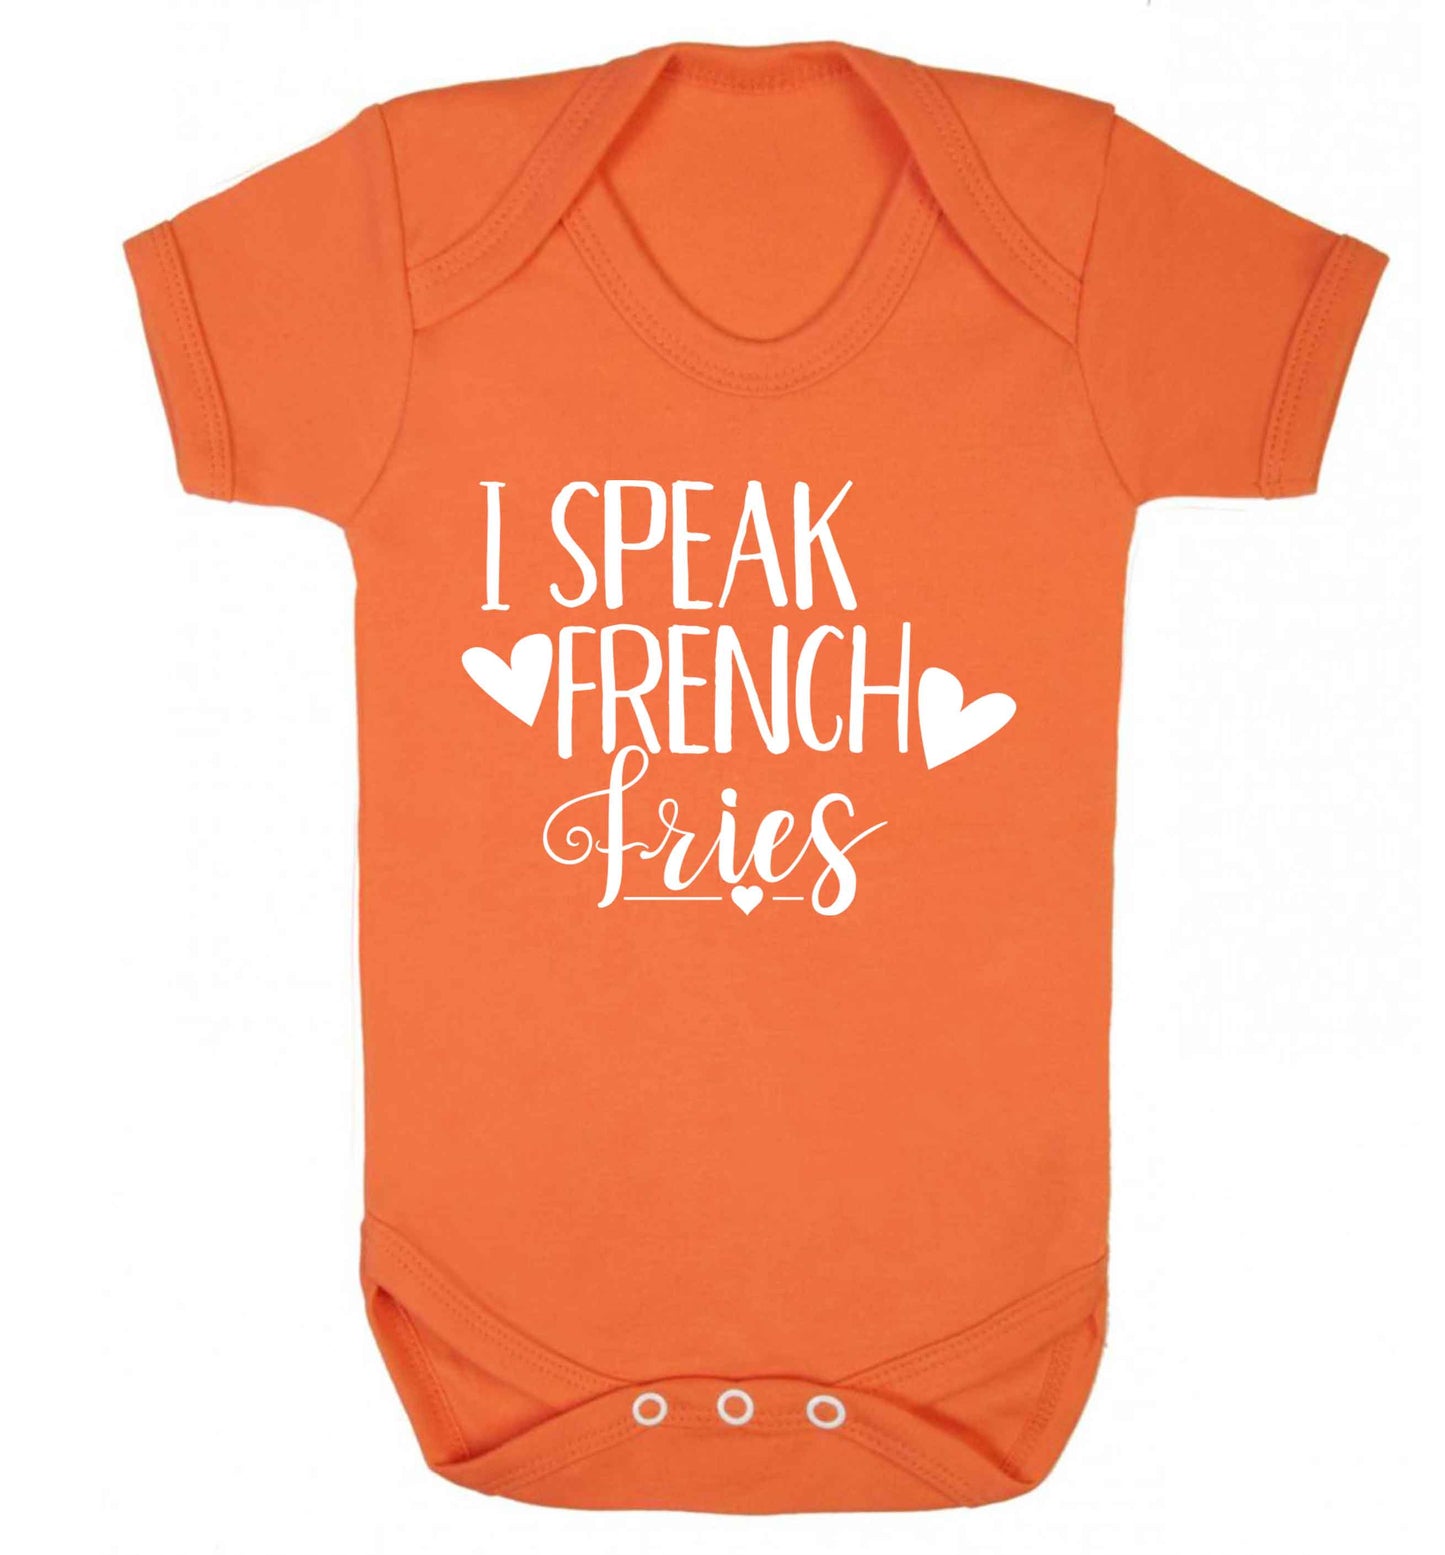 I speak French fries Baby Vest orange 18-24 months